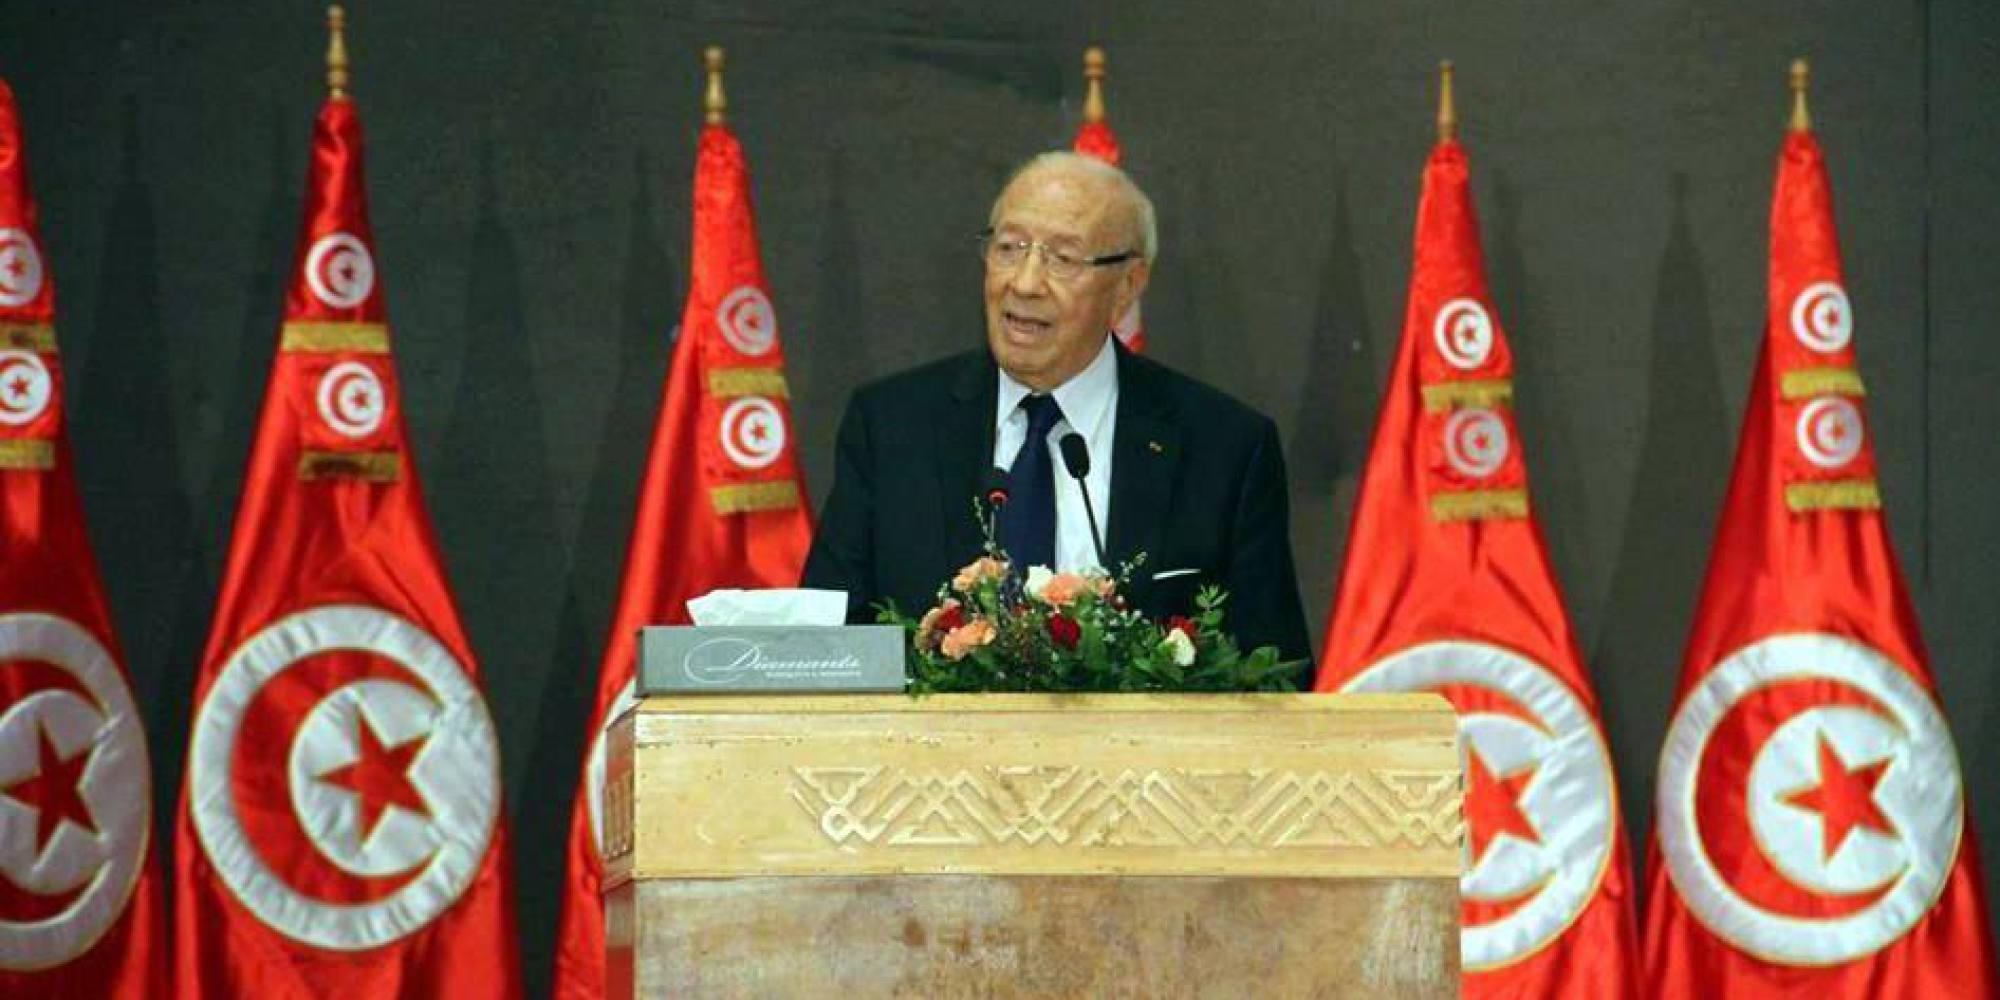 Nidaa Tounes comes first in Tunisia polls 